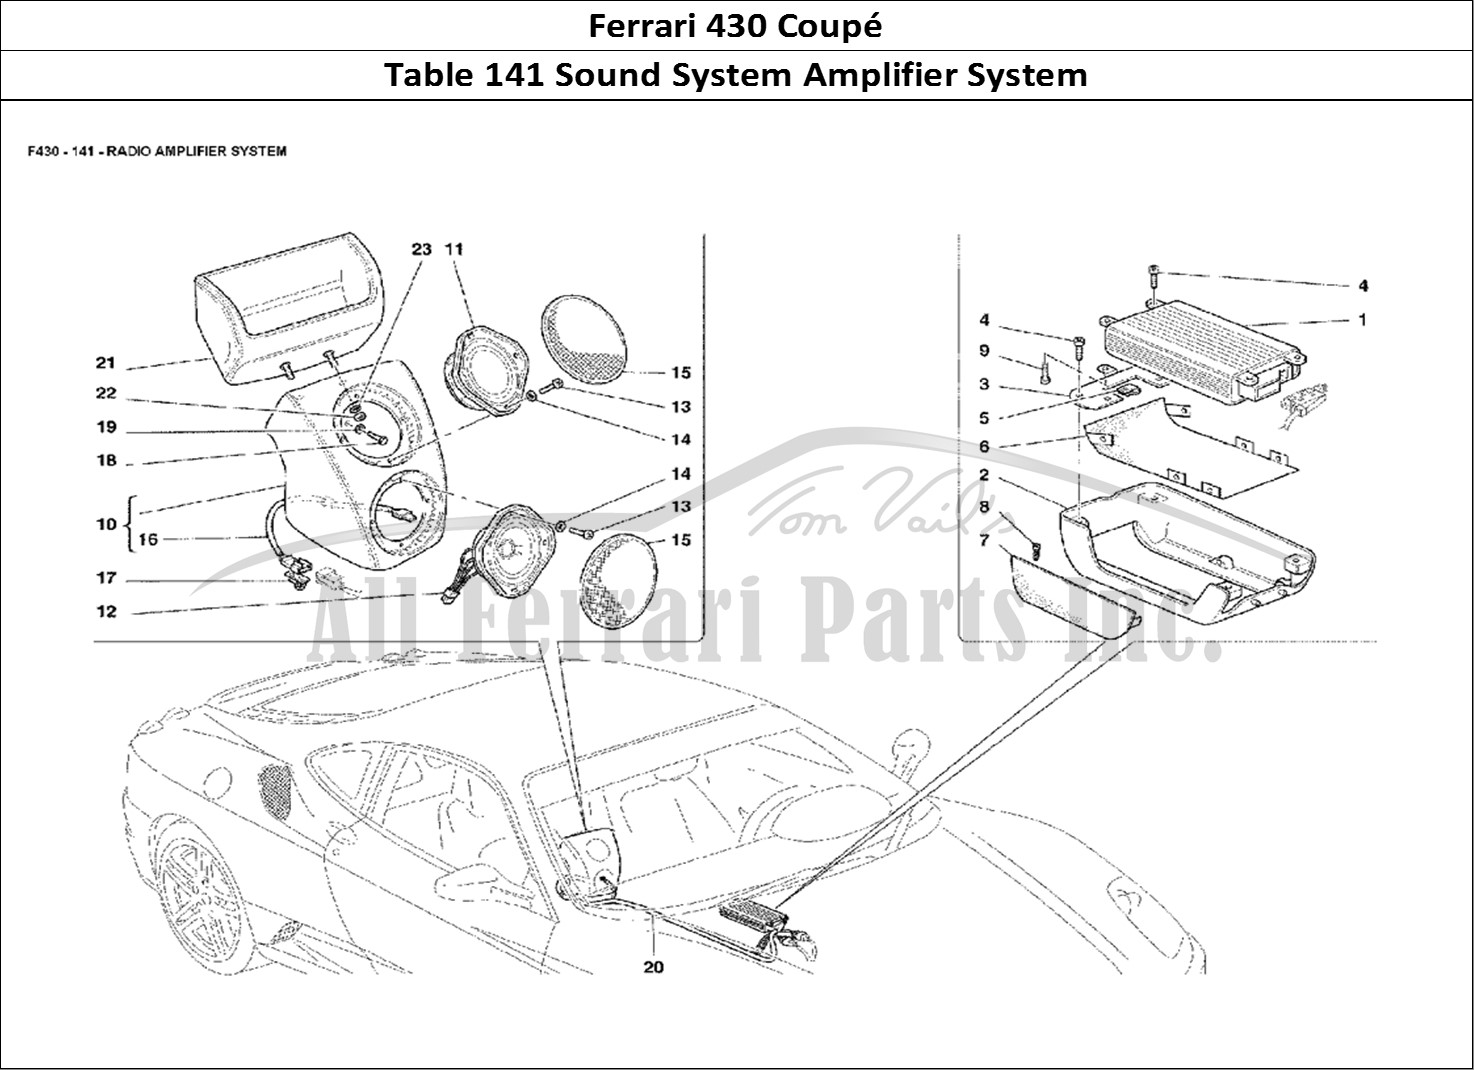 Ferrari Parts Ferrari 430 Coup Page 141 Radio Amplifier System